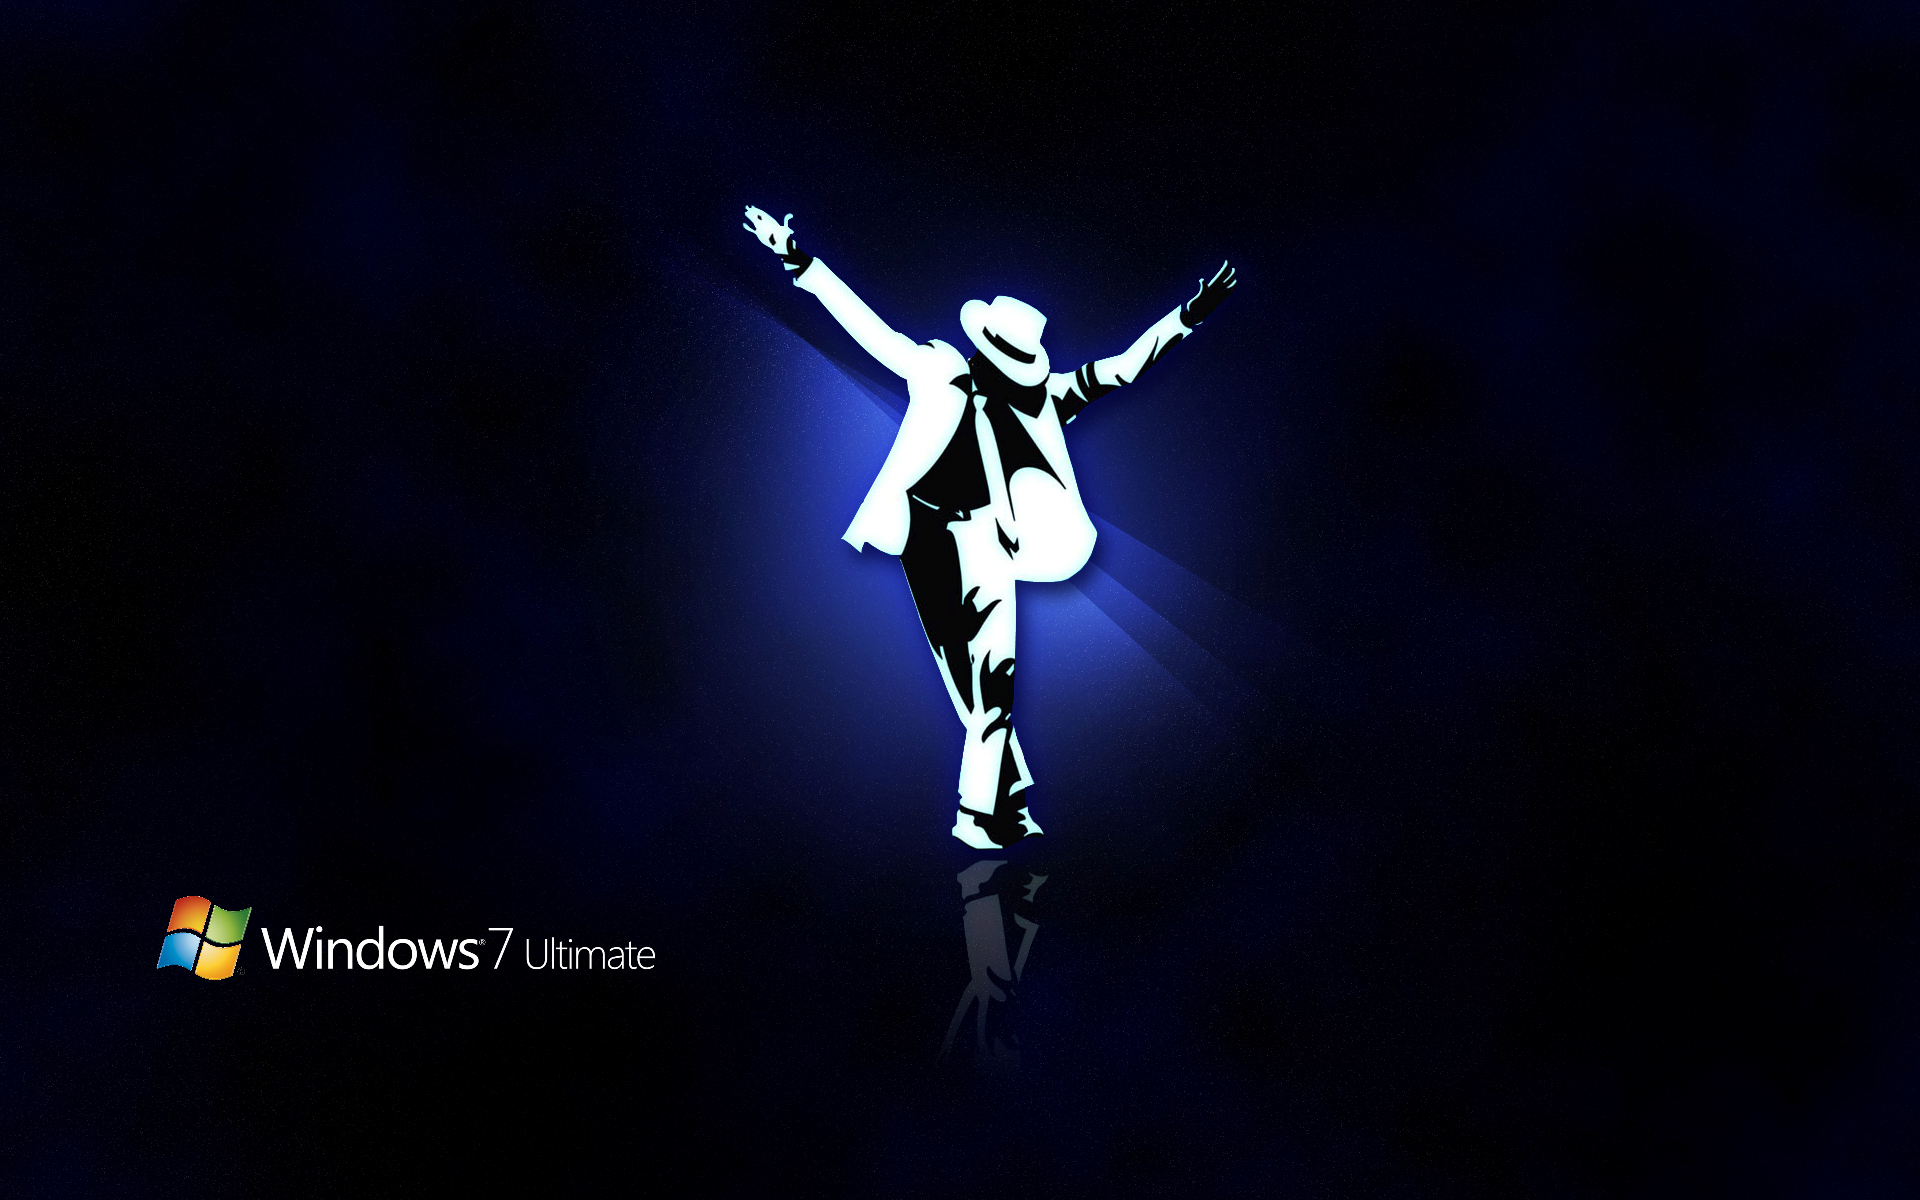 Michael Jackson Wallpaper and Theme for Windows 7 | Redmond Pie